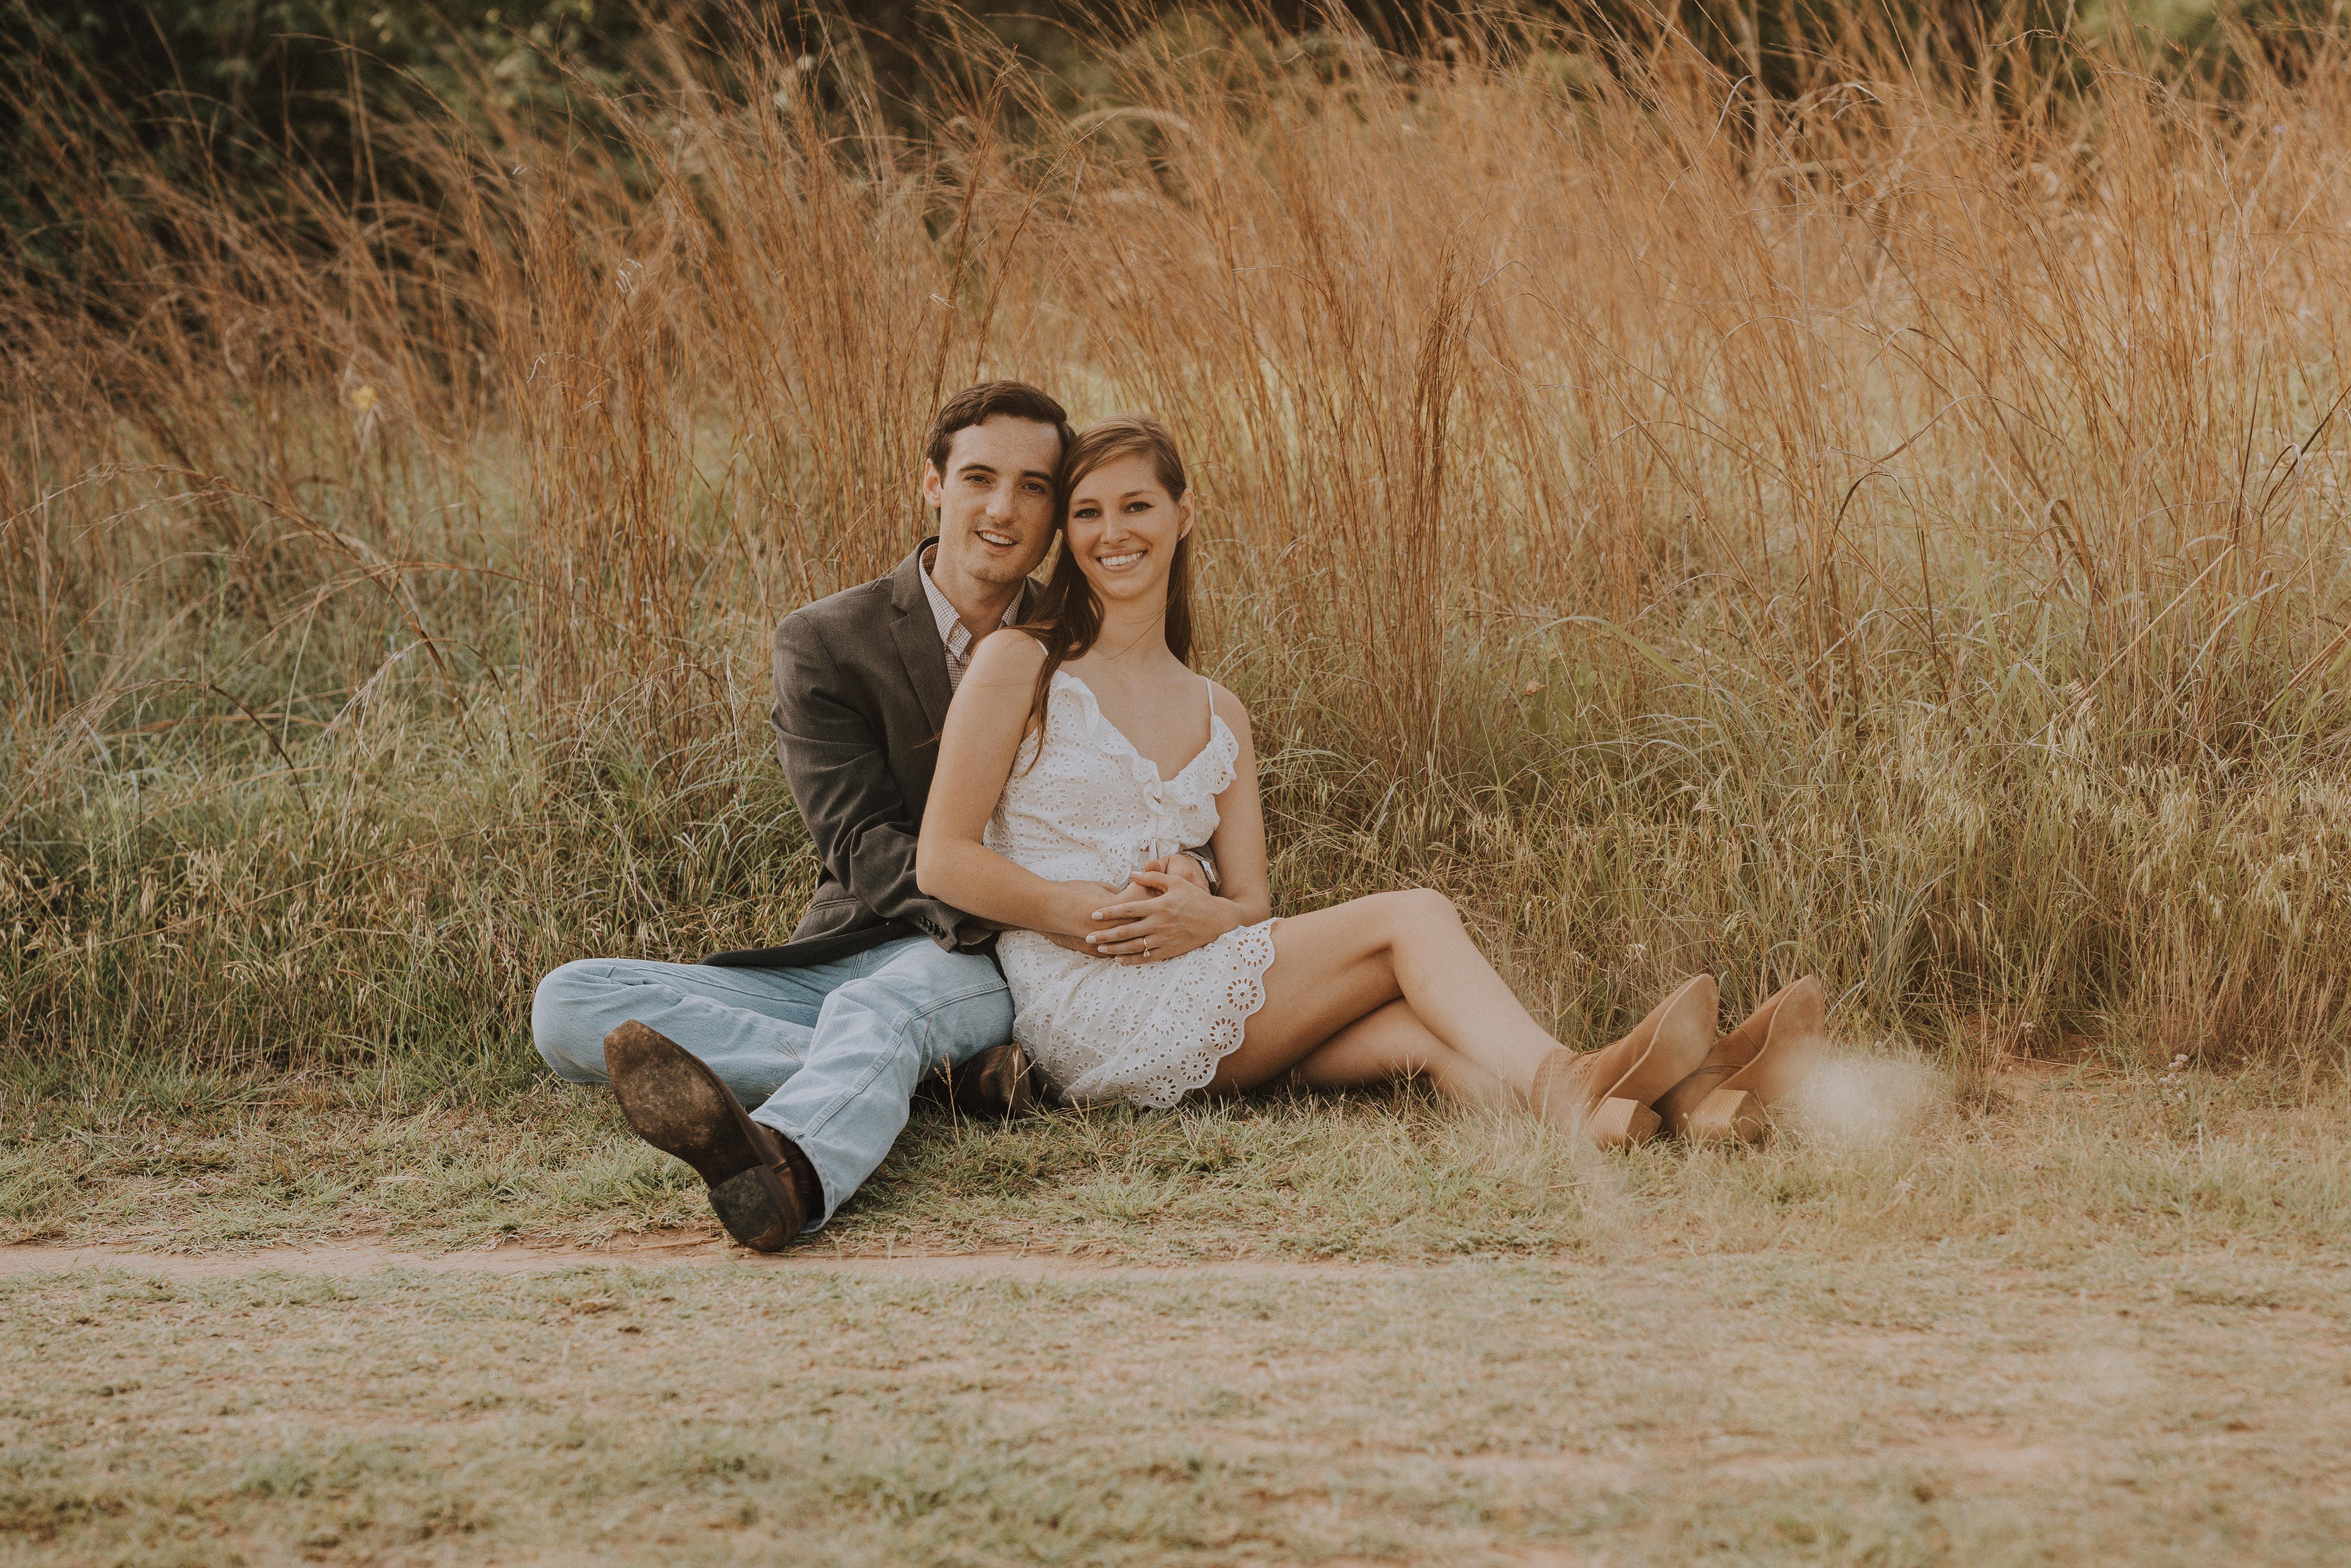 The Wedding Website of Sarah Case and Peter Chaze